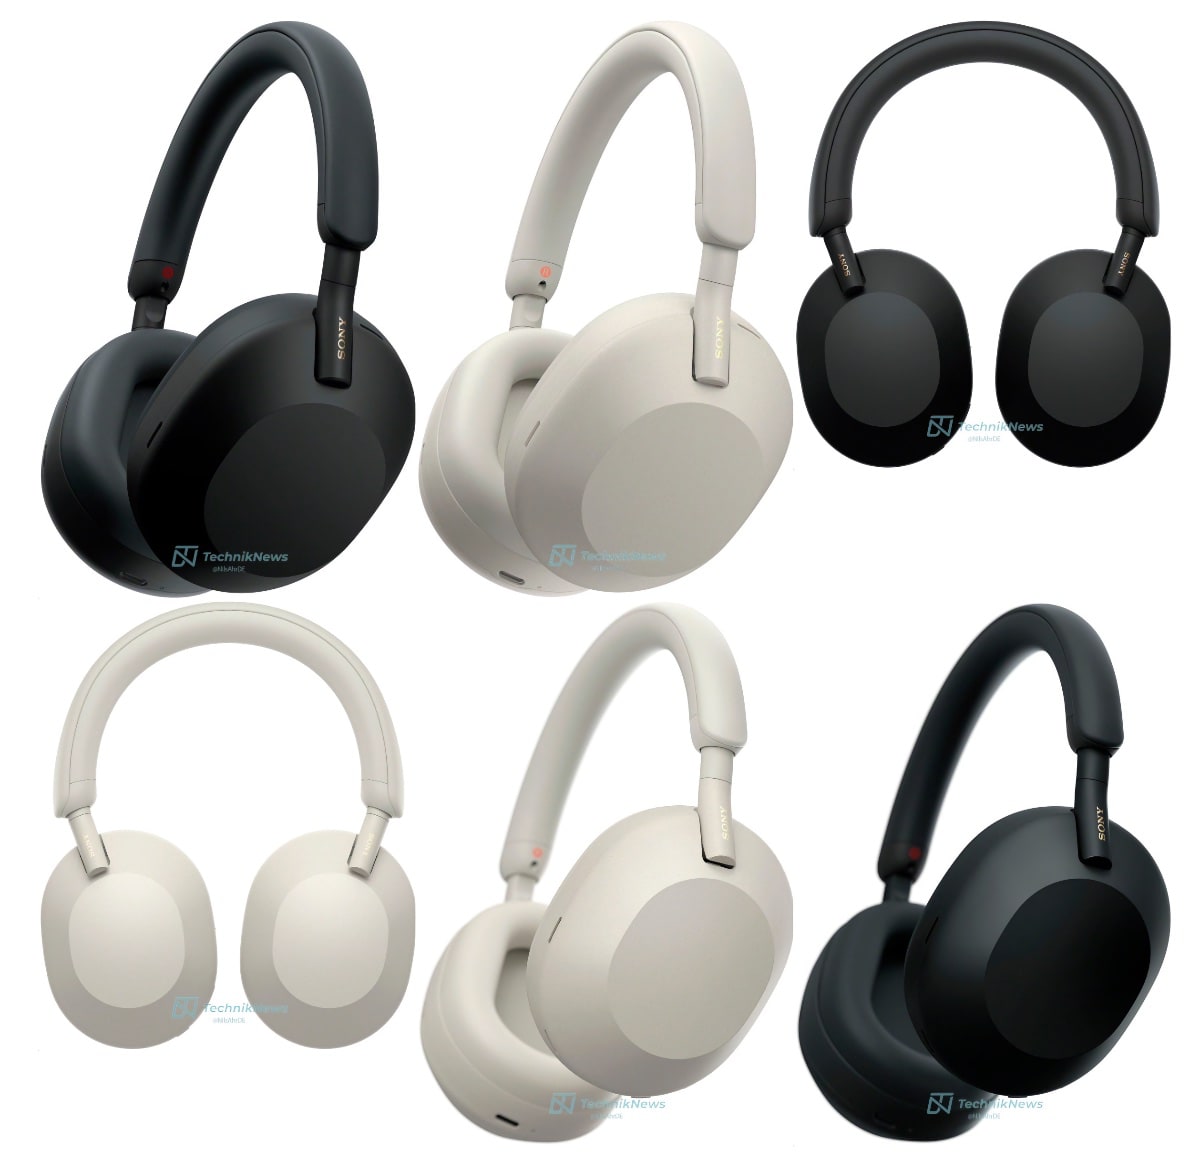 Sony WH-1000XM5, neuer Over-Ear-Kopfhörer mit ANC 